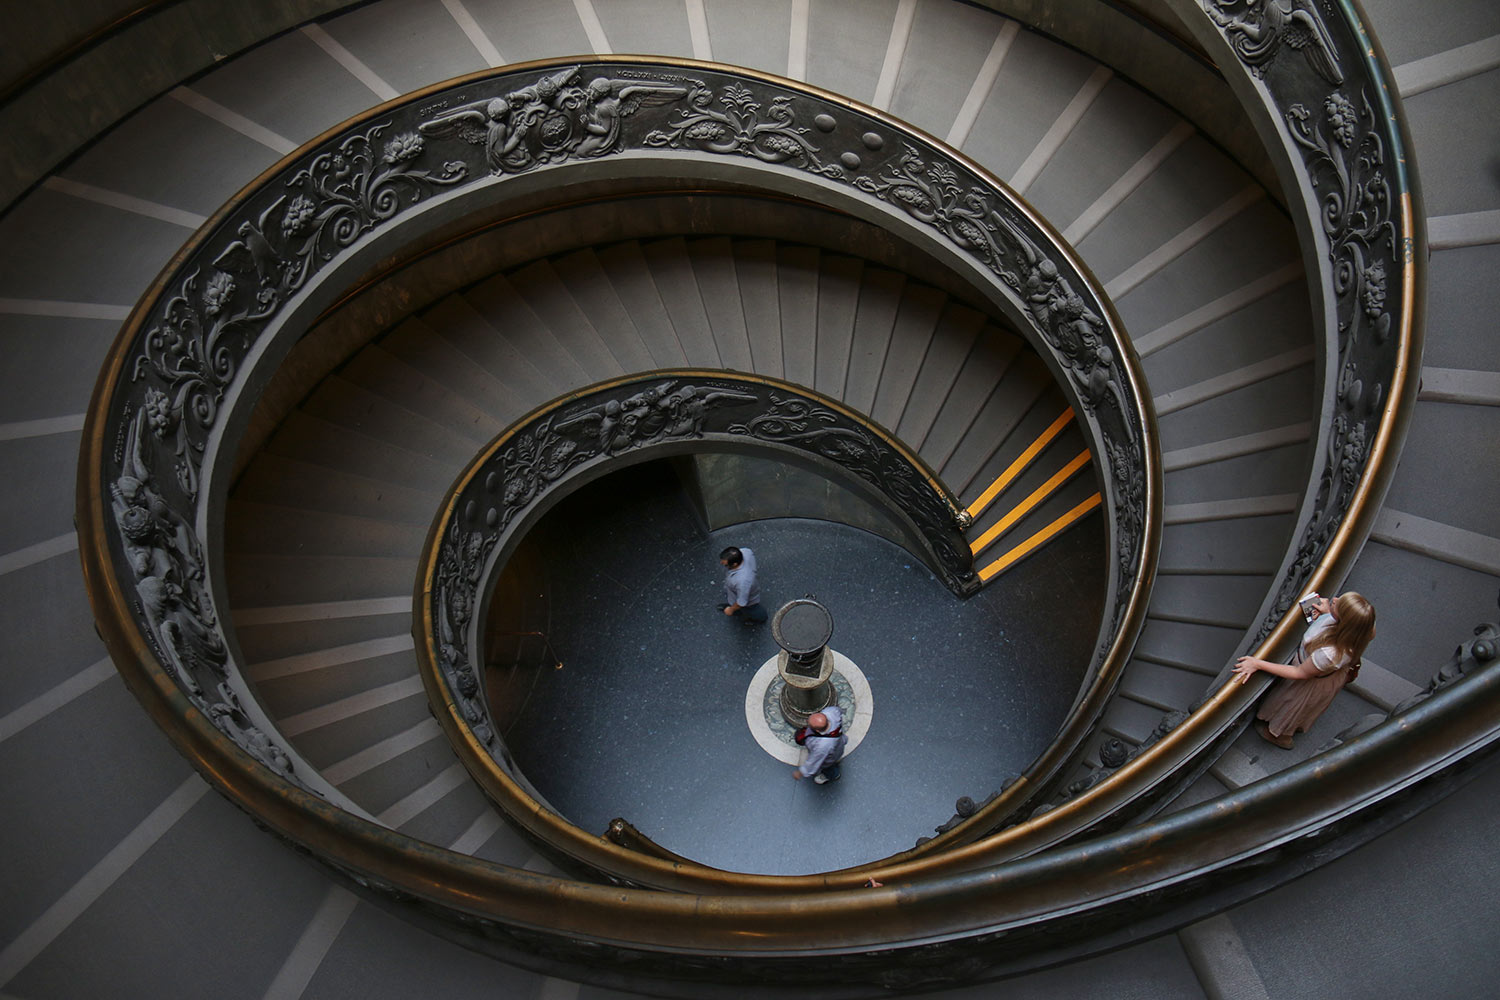 L'escalier de Bramante, Vatican, Vatican, Rome, Italie / Del Bramante stairs, Vatican, Rome, Italy